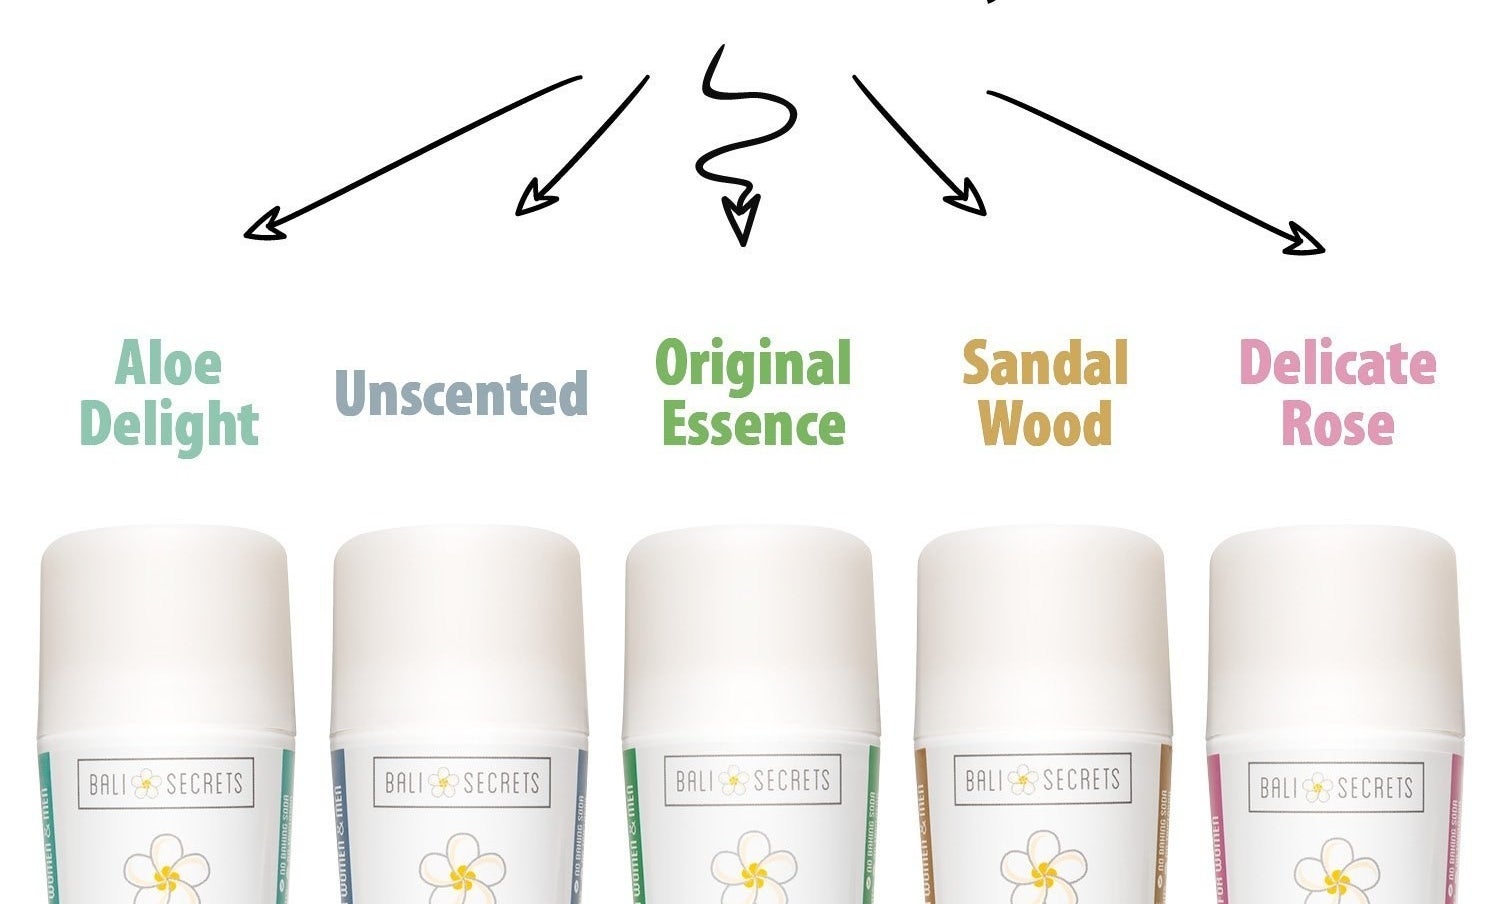 all five deodorant scents